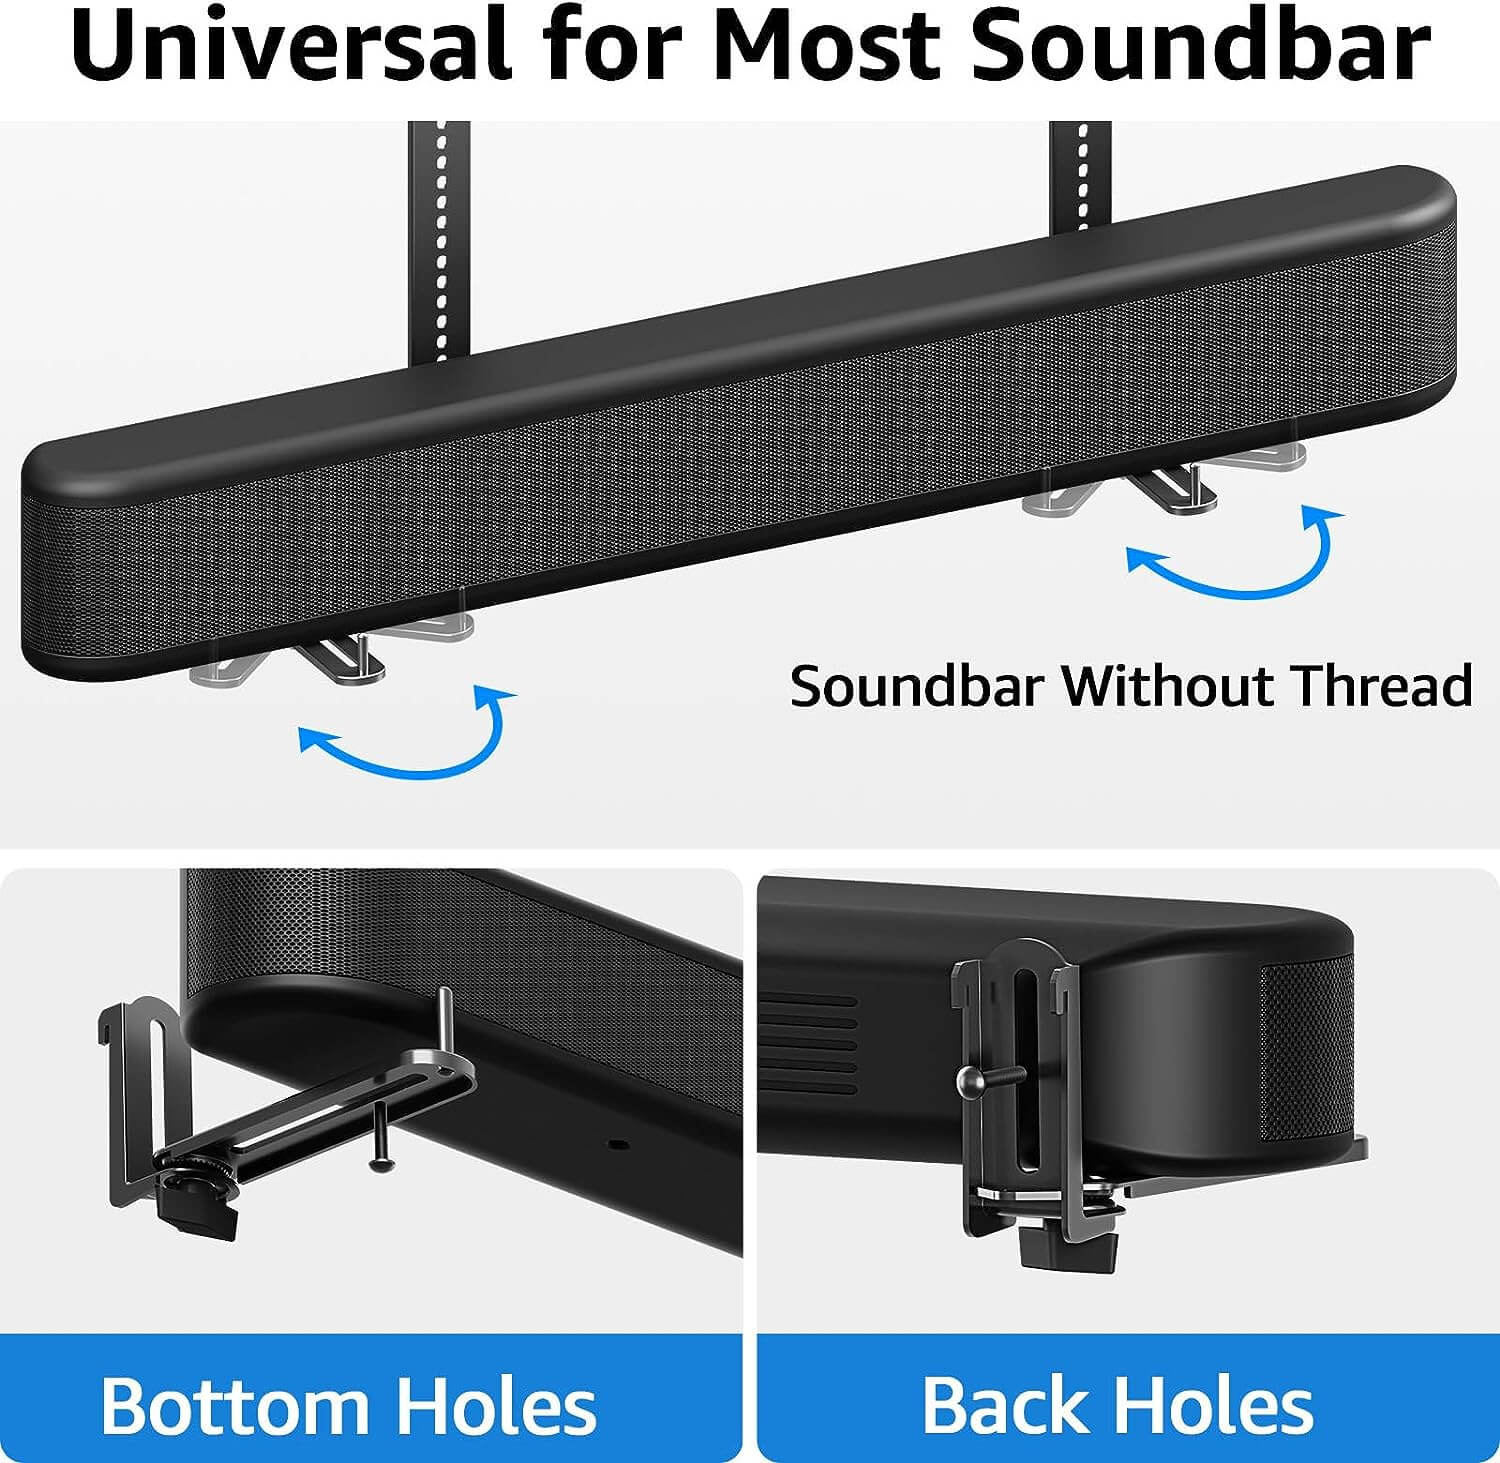 Universal Soundbar Mount Soundbar Bracket MU9121